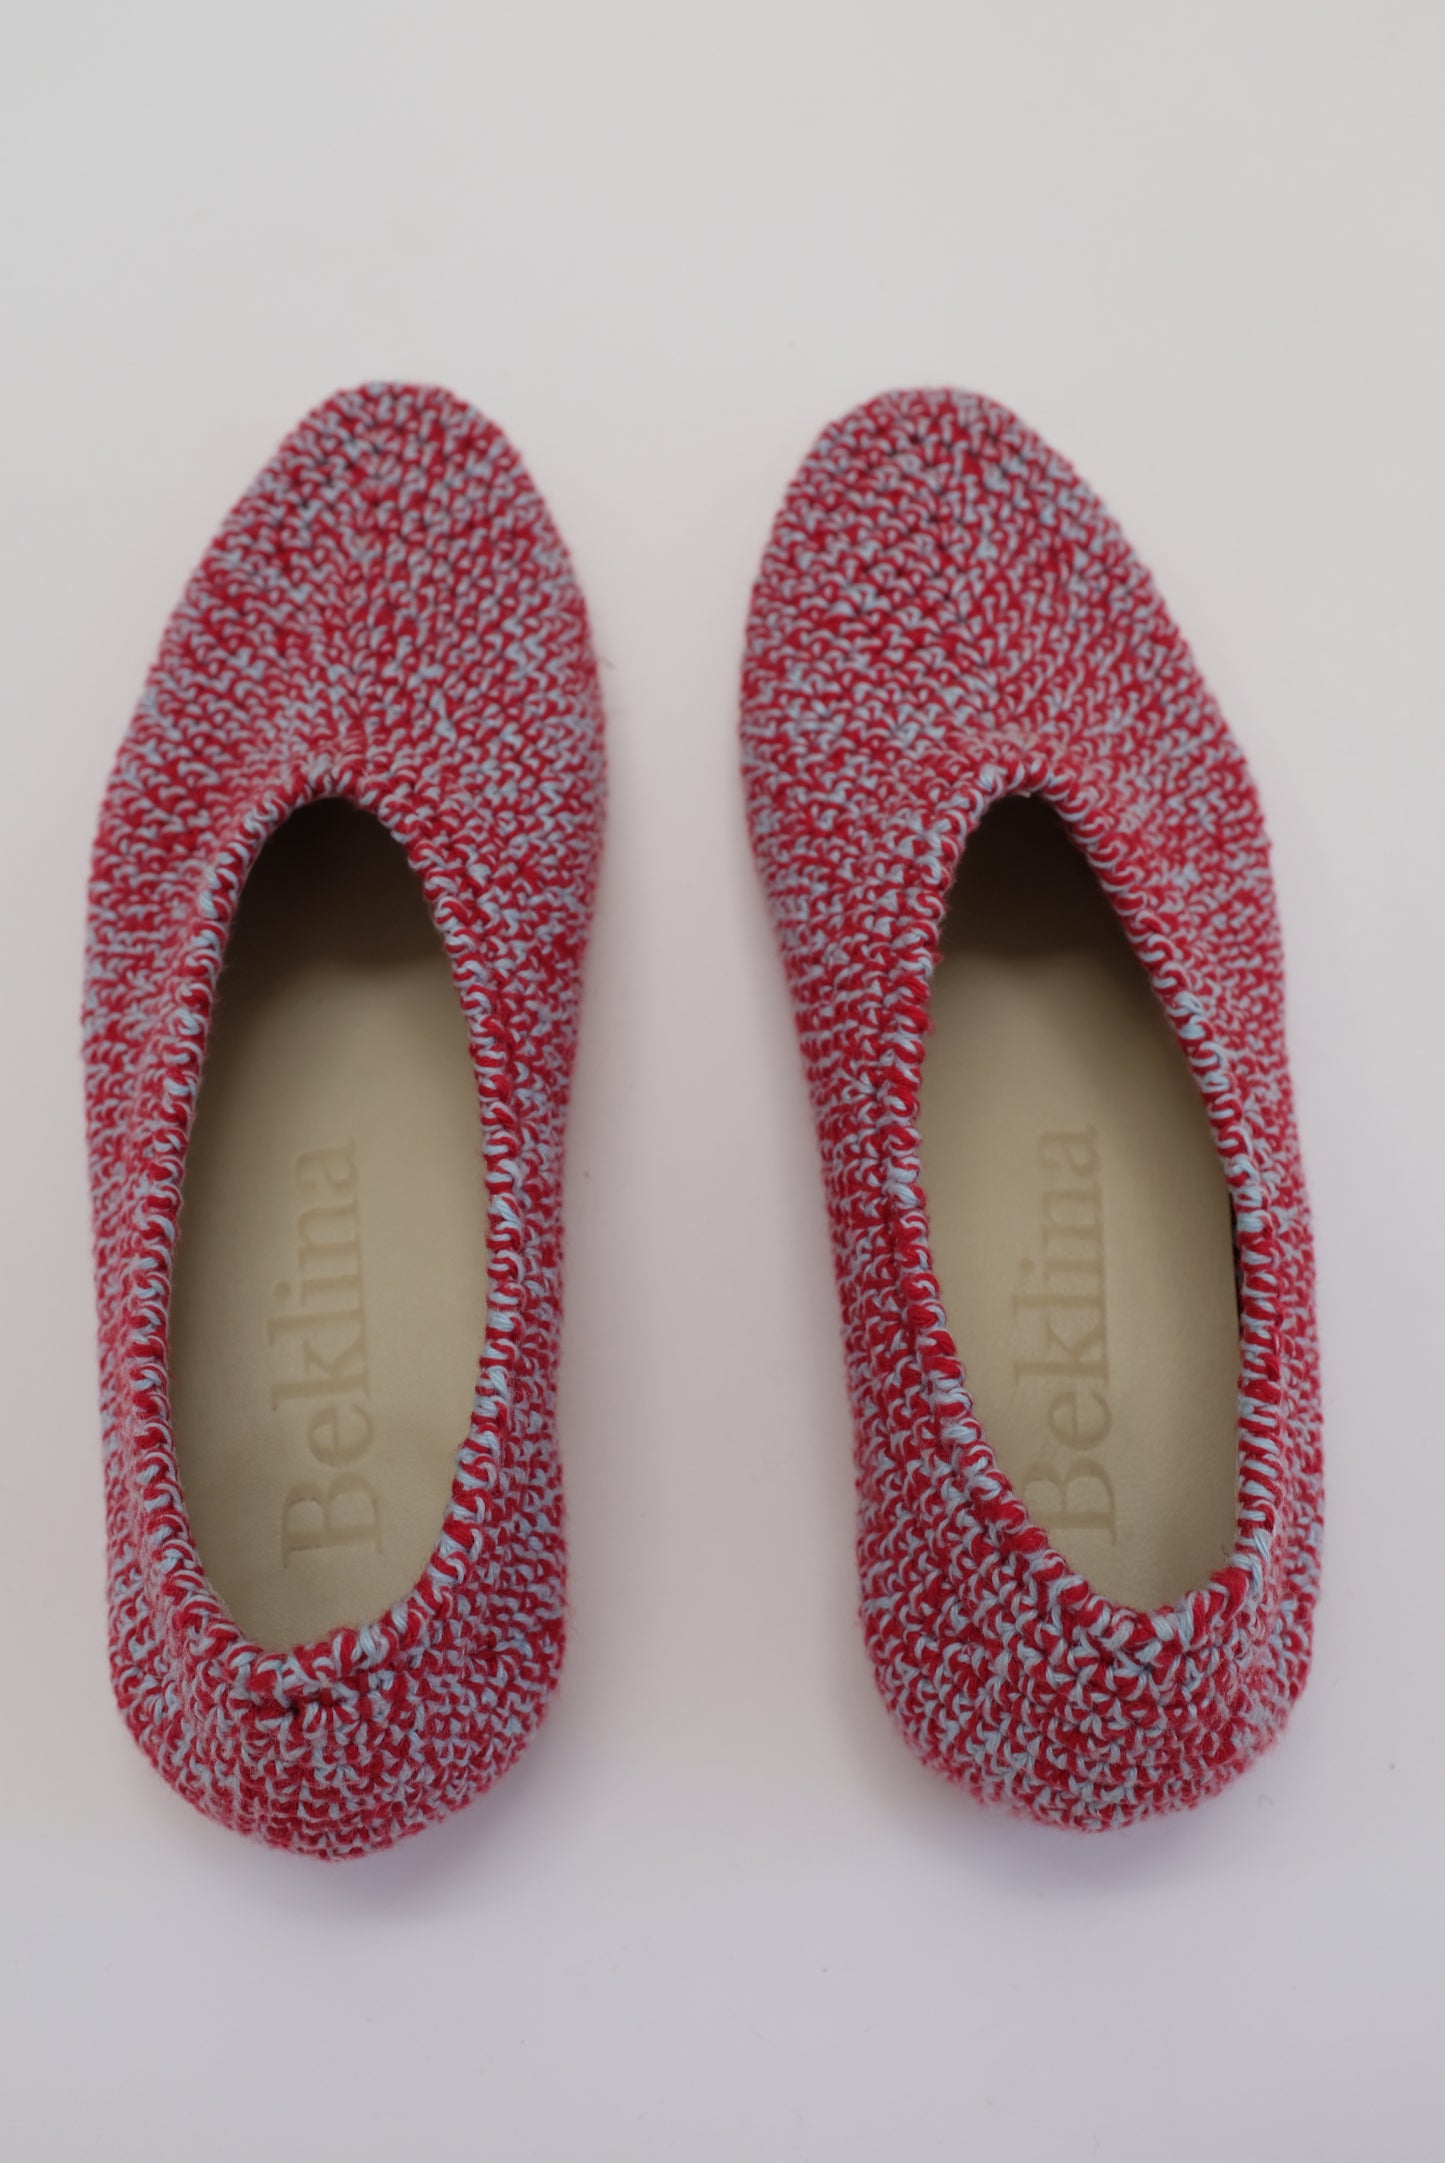  Beklina Crochet Ballet Flats Pallida/Umber